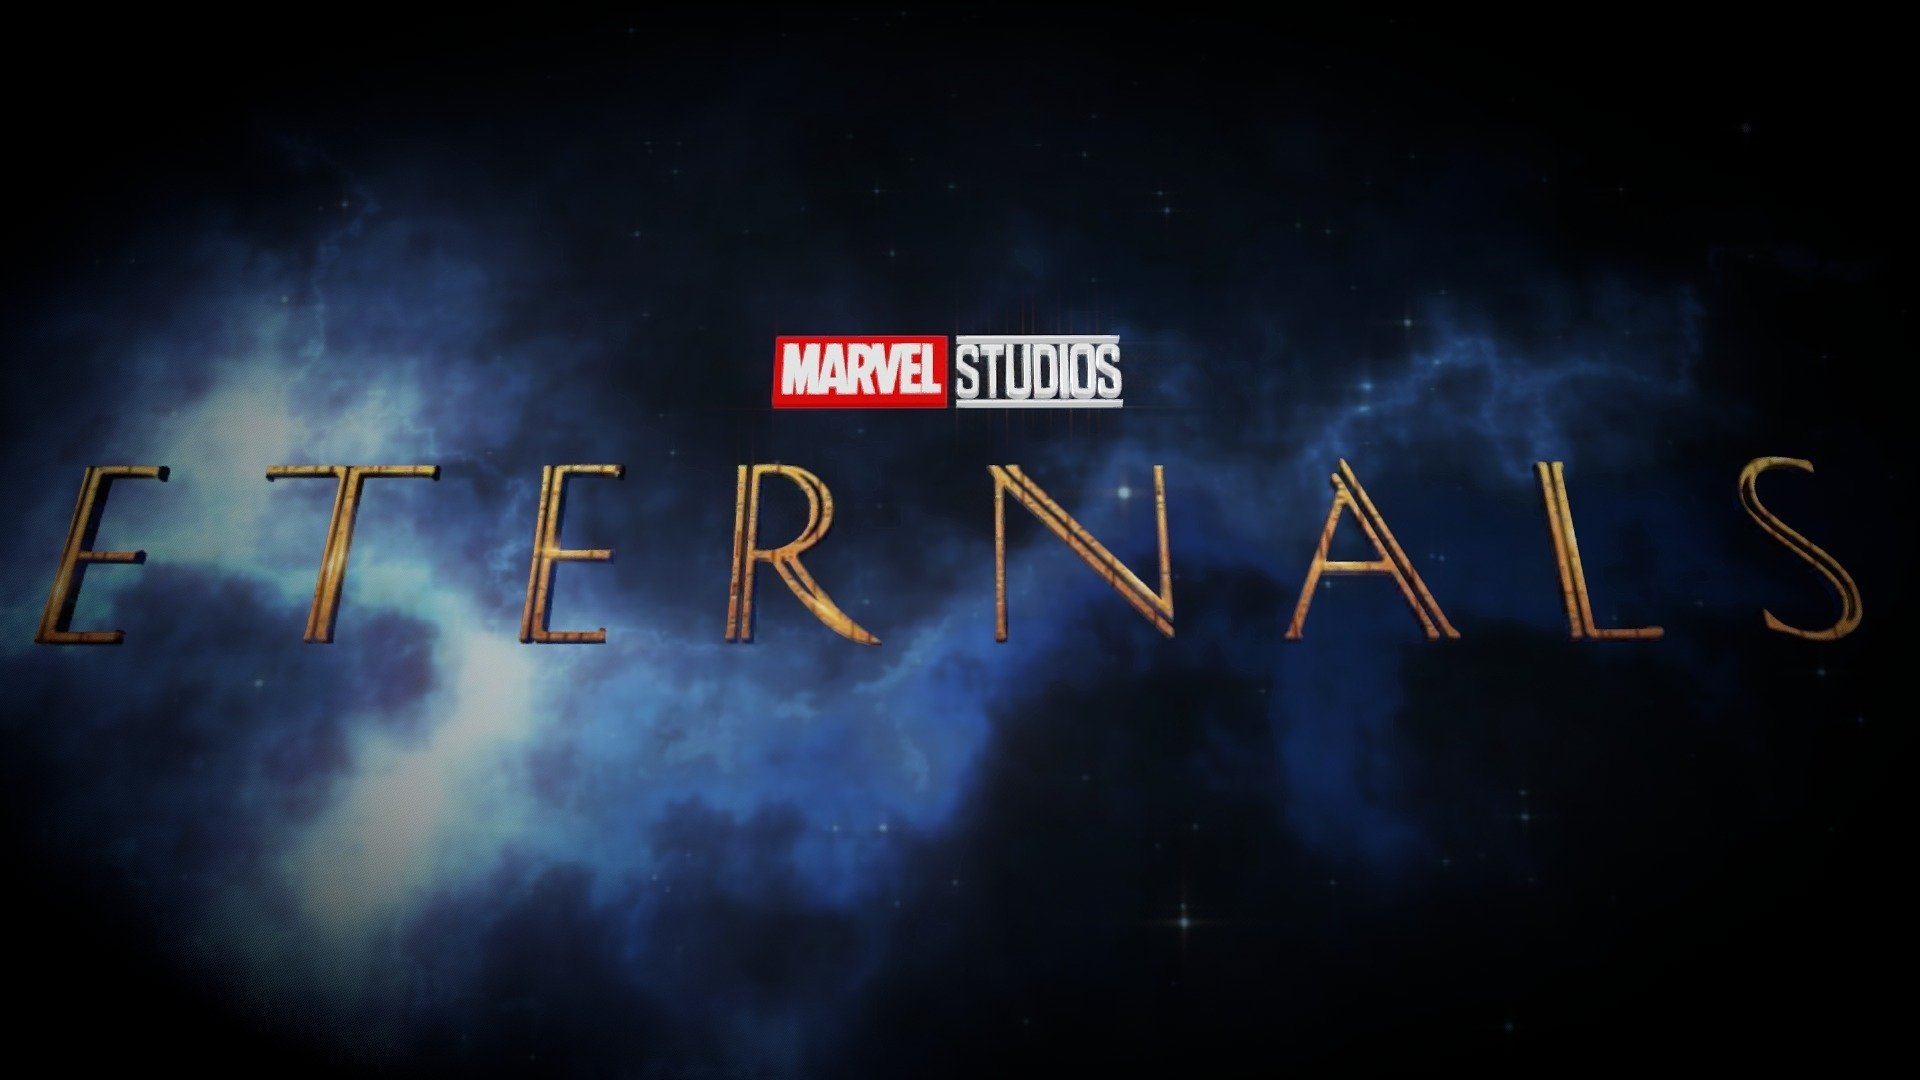 Marvel Eternals